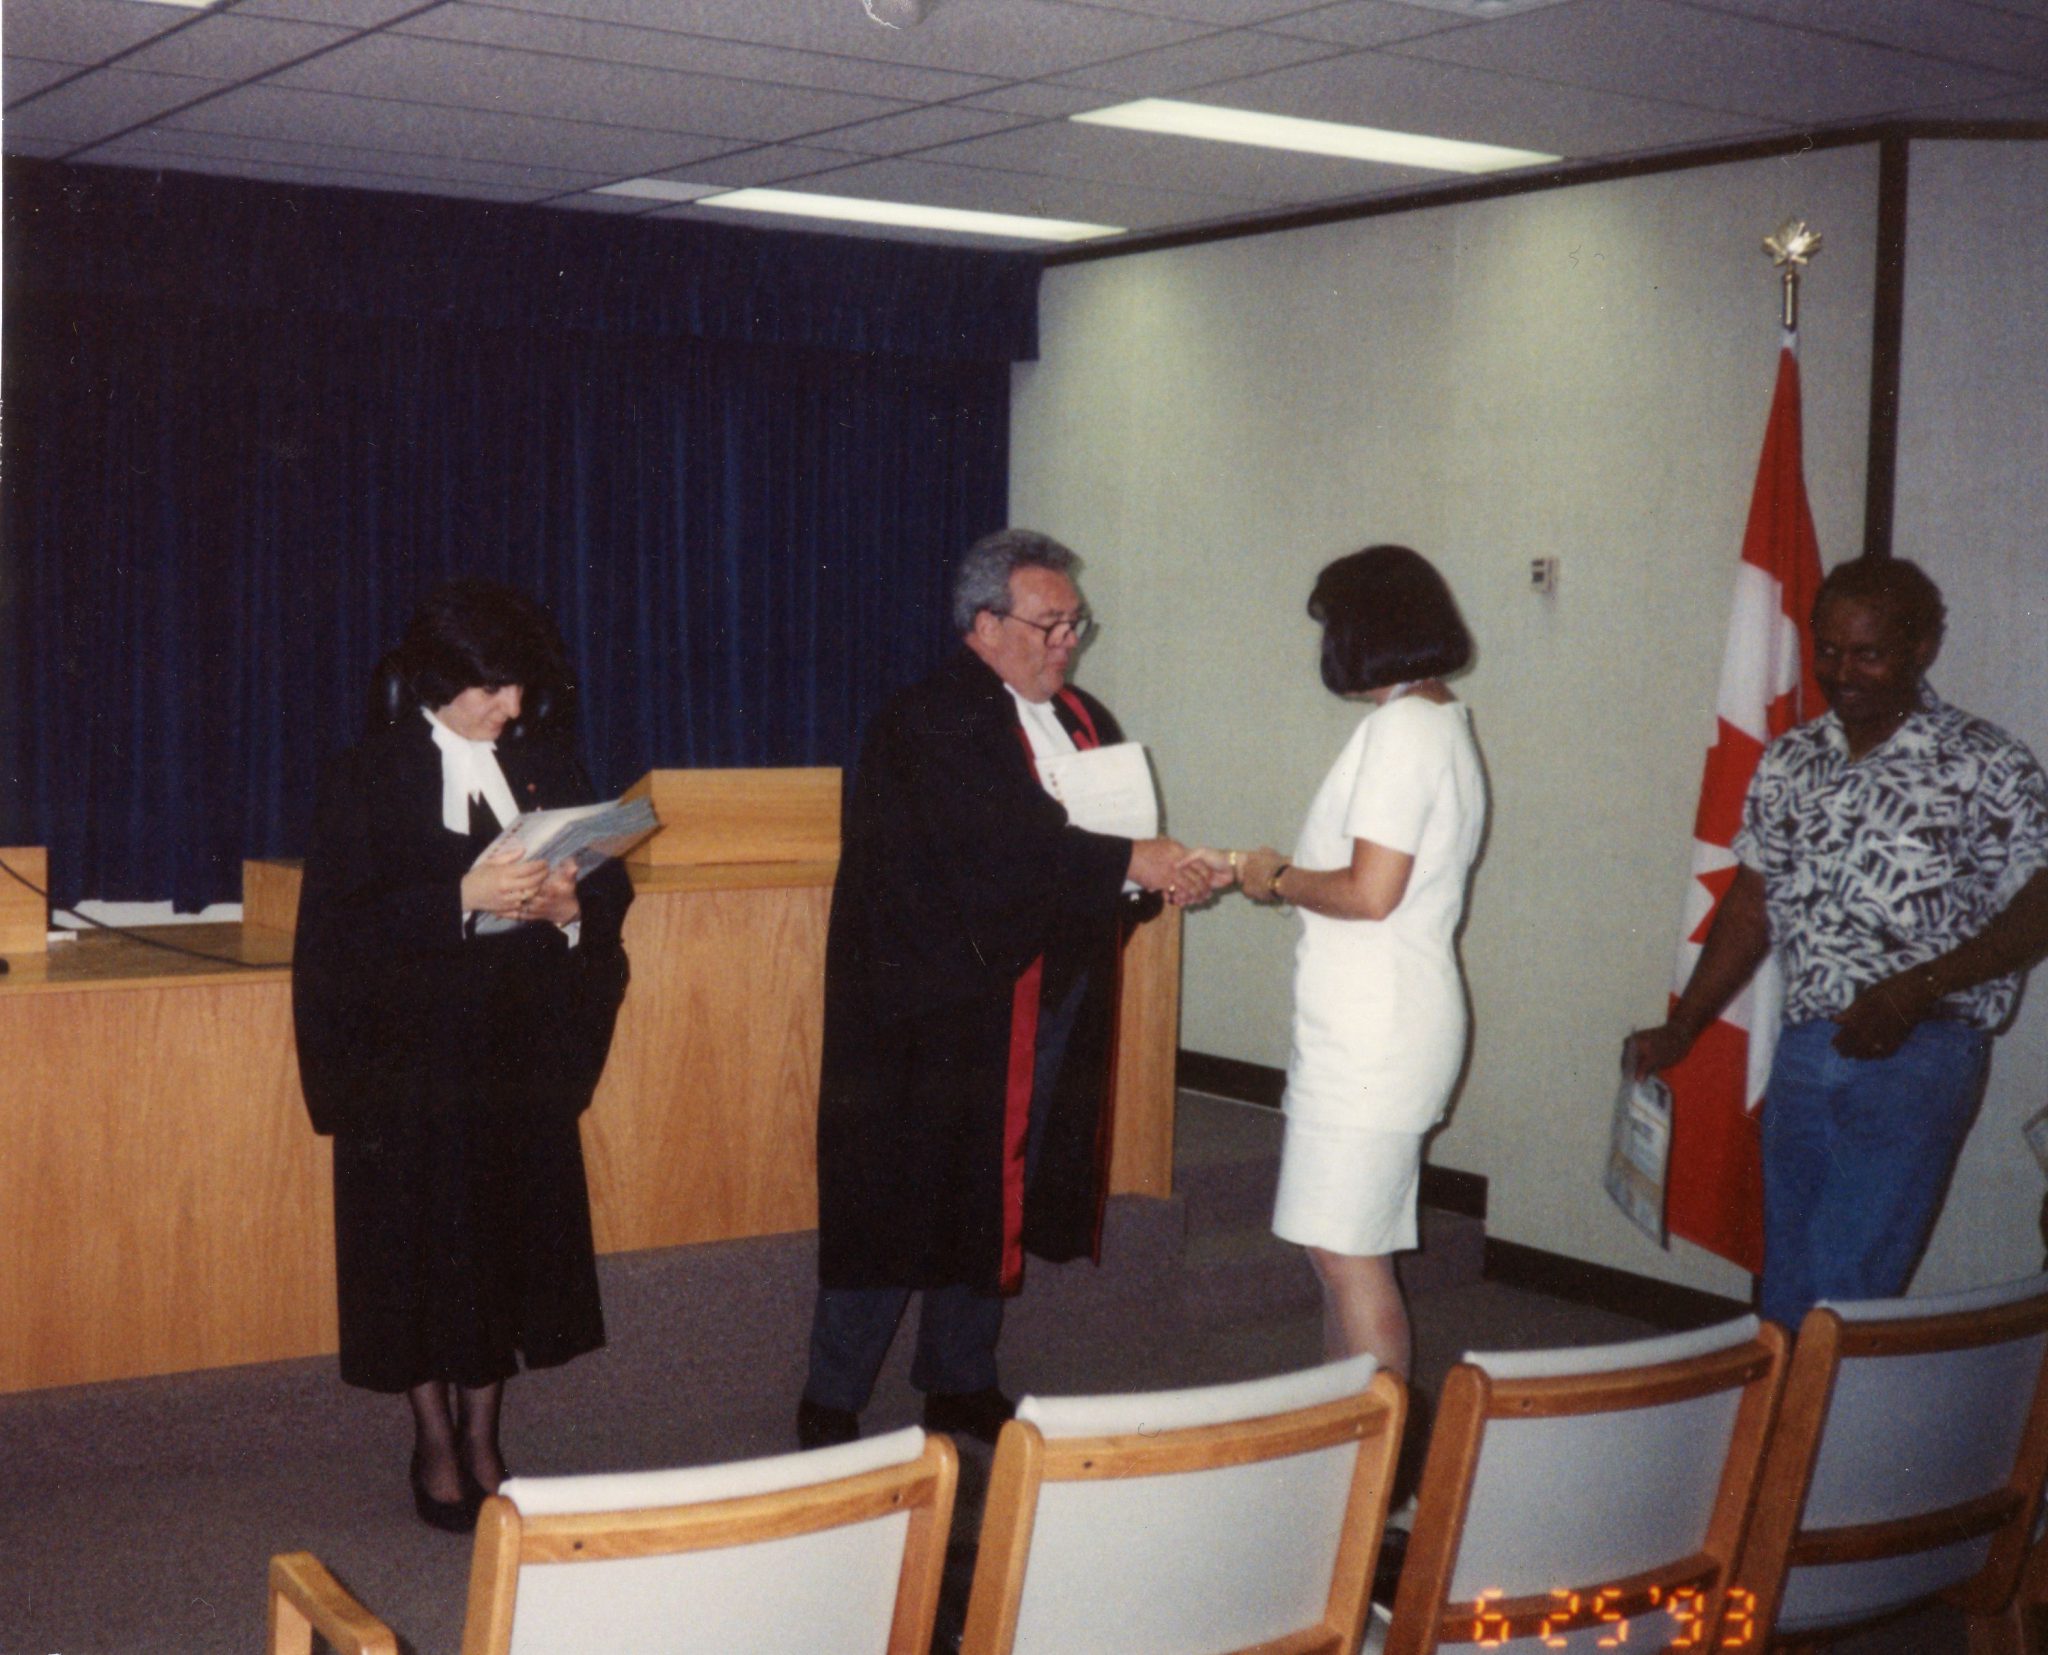 Canadian citizenship ceremony